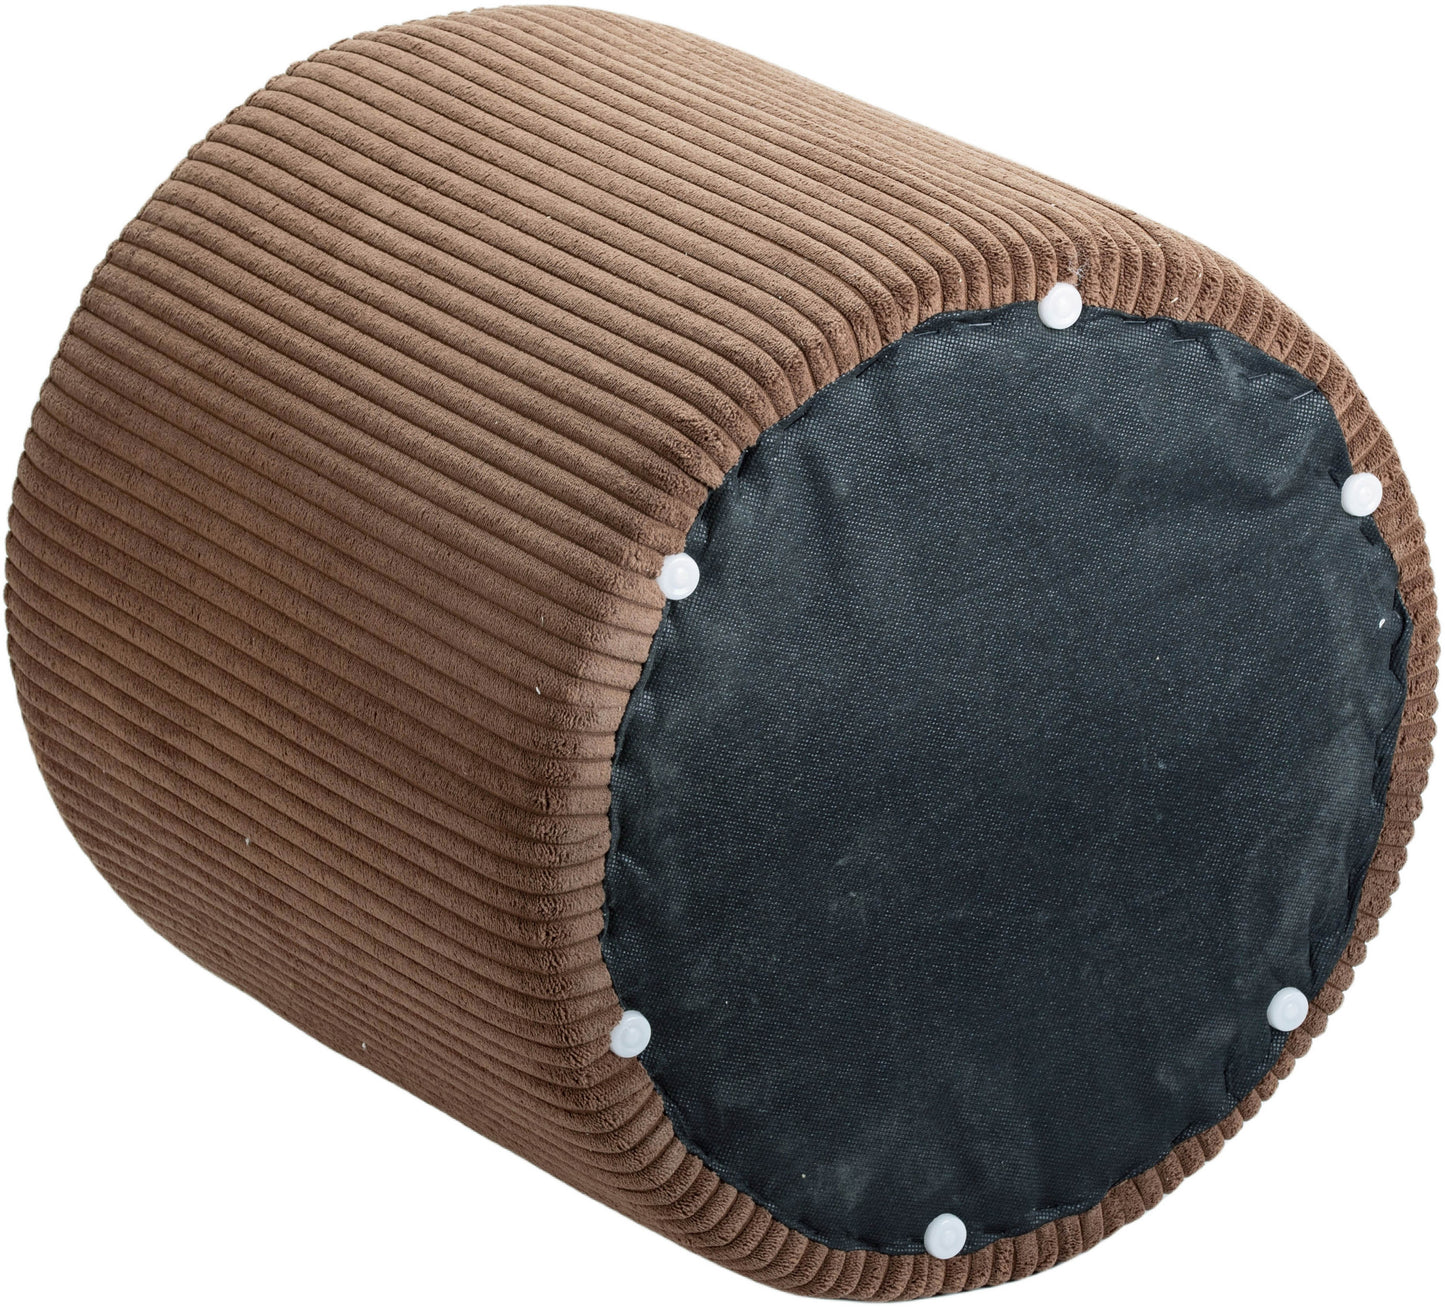 serafina brown microsuede fabric ottoman/stool brown